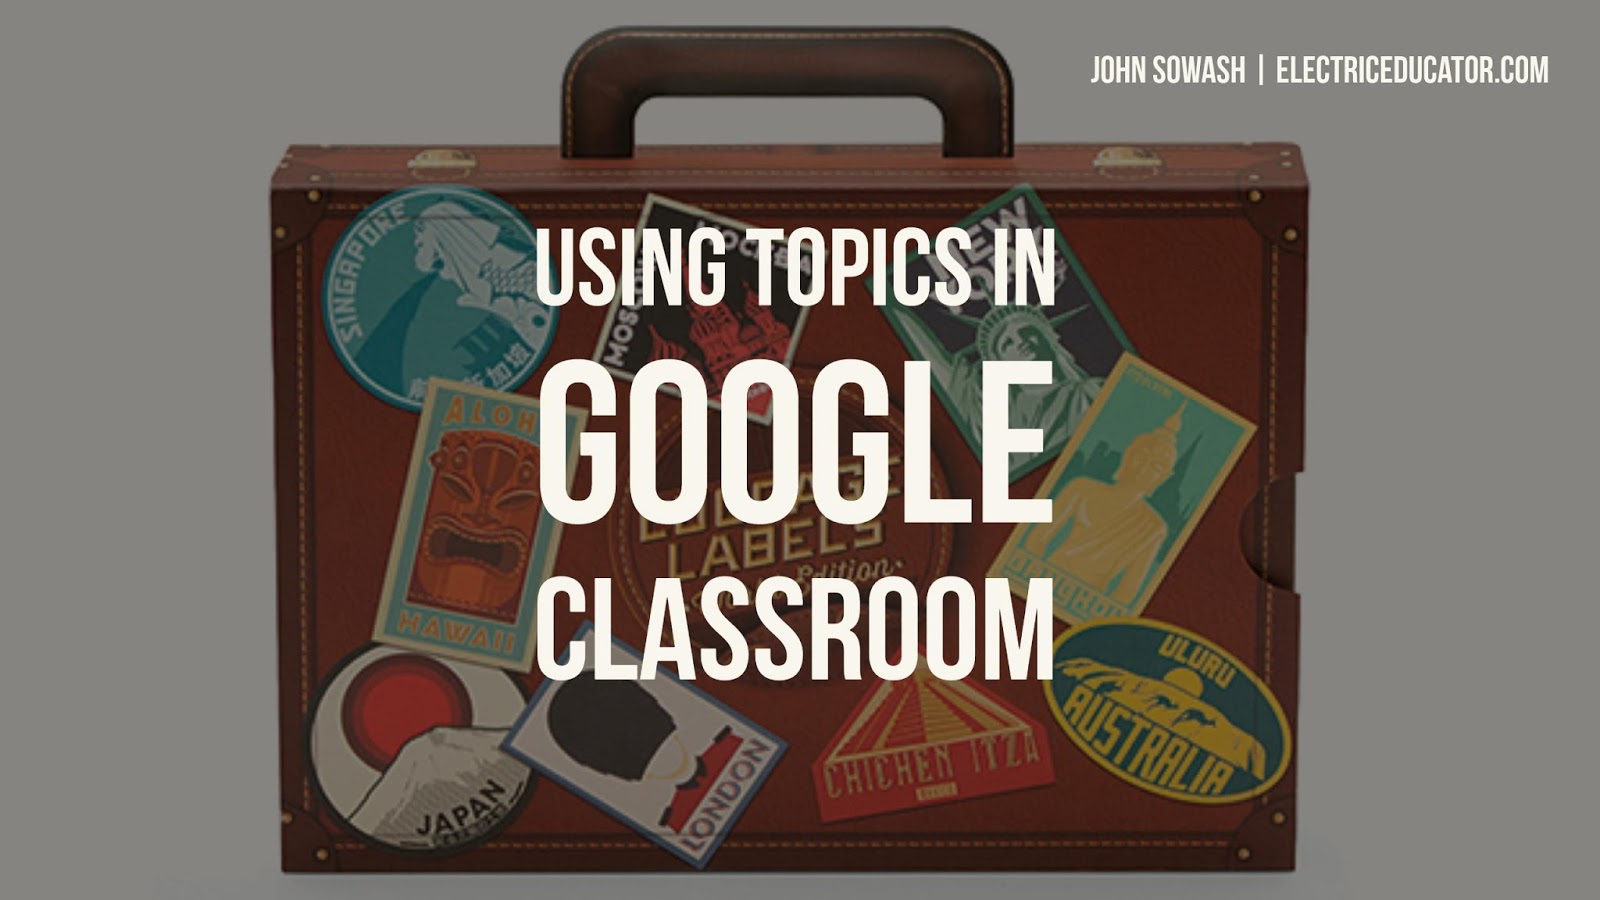 The Electric Educator: Using Topics in Google Classroom